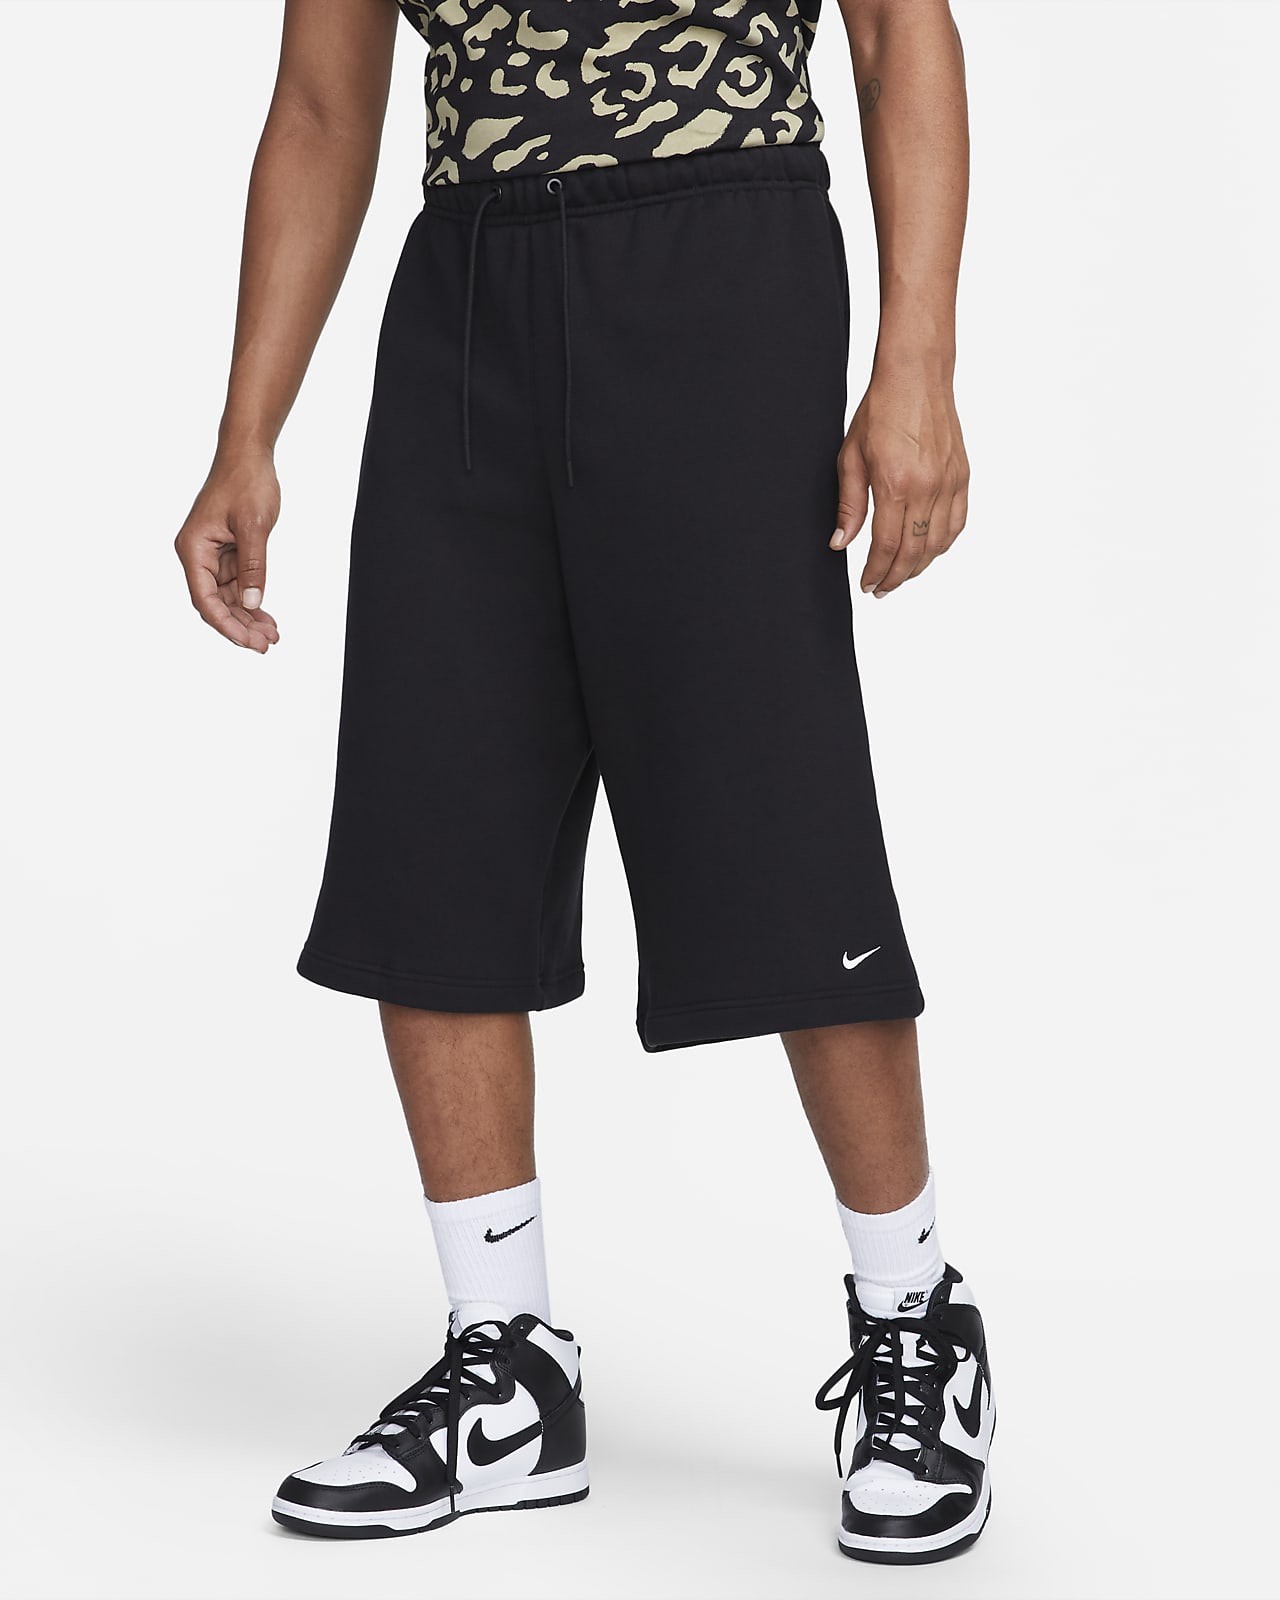 Terry Circa Nike Men\'s Sportswear Shorts. French